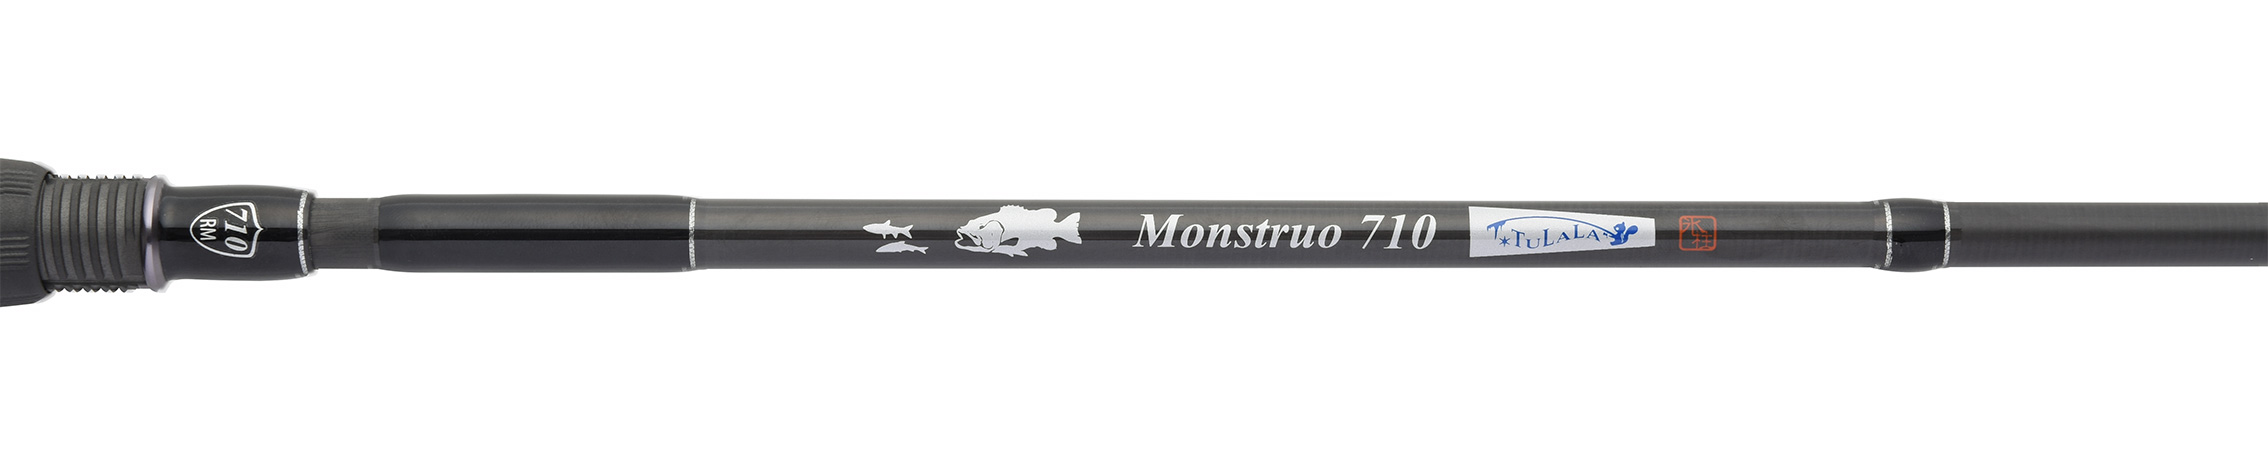 Monstruo 710 | Logo